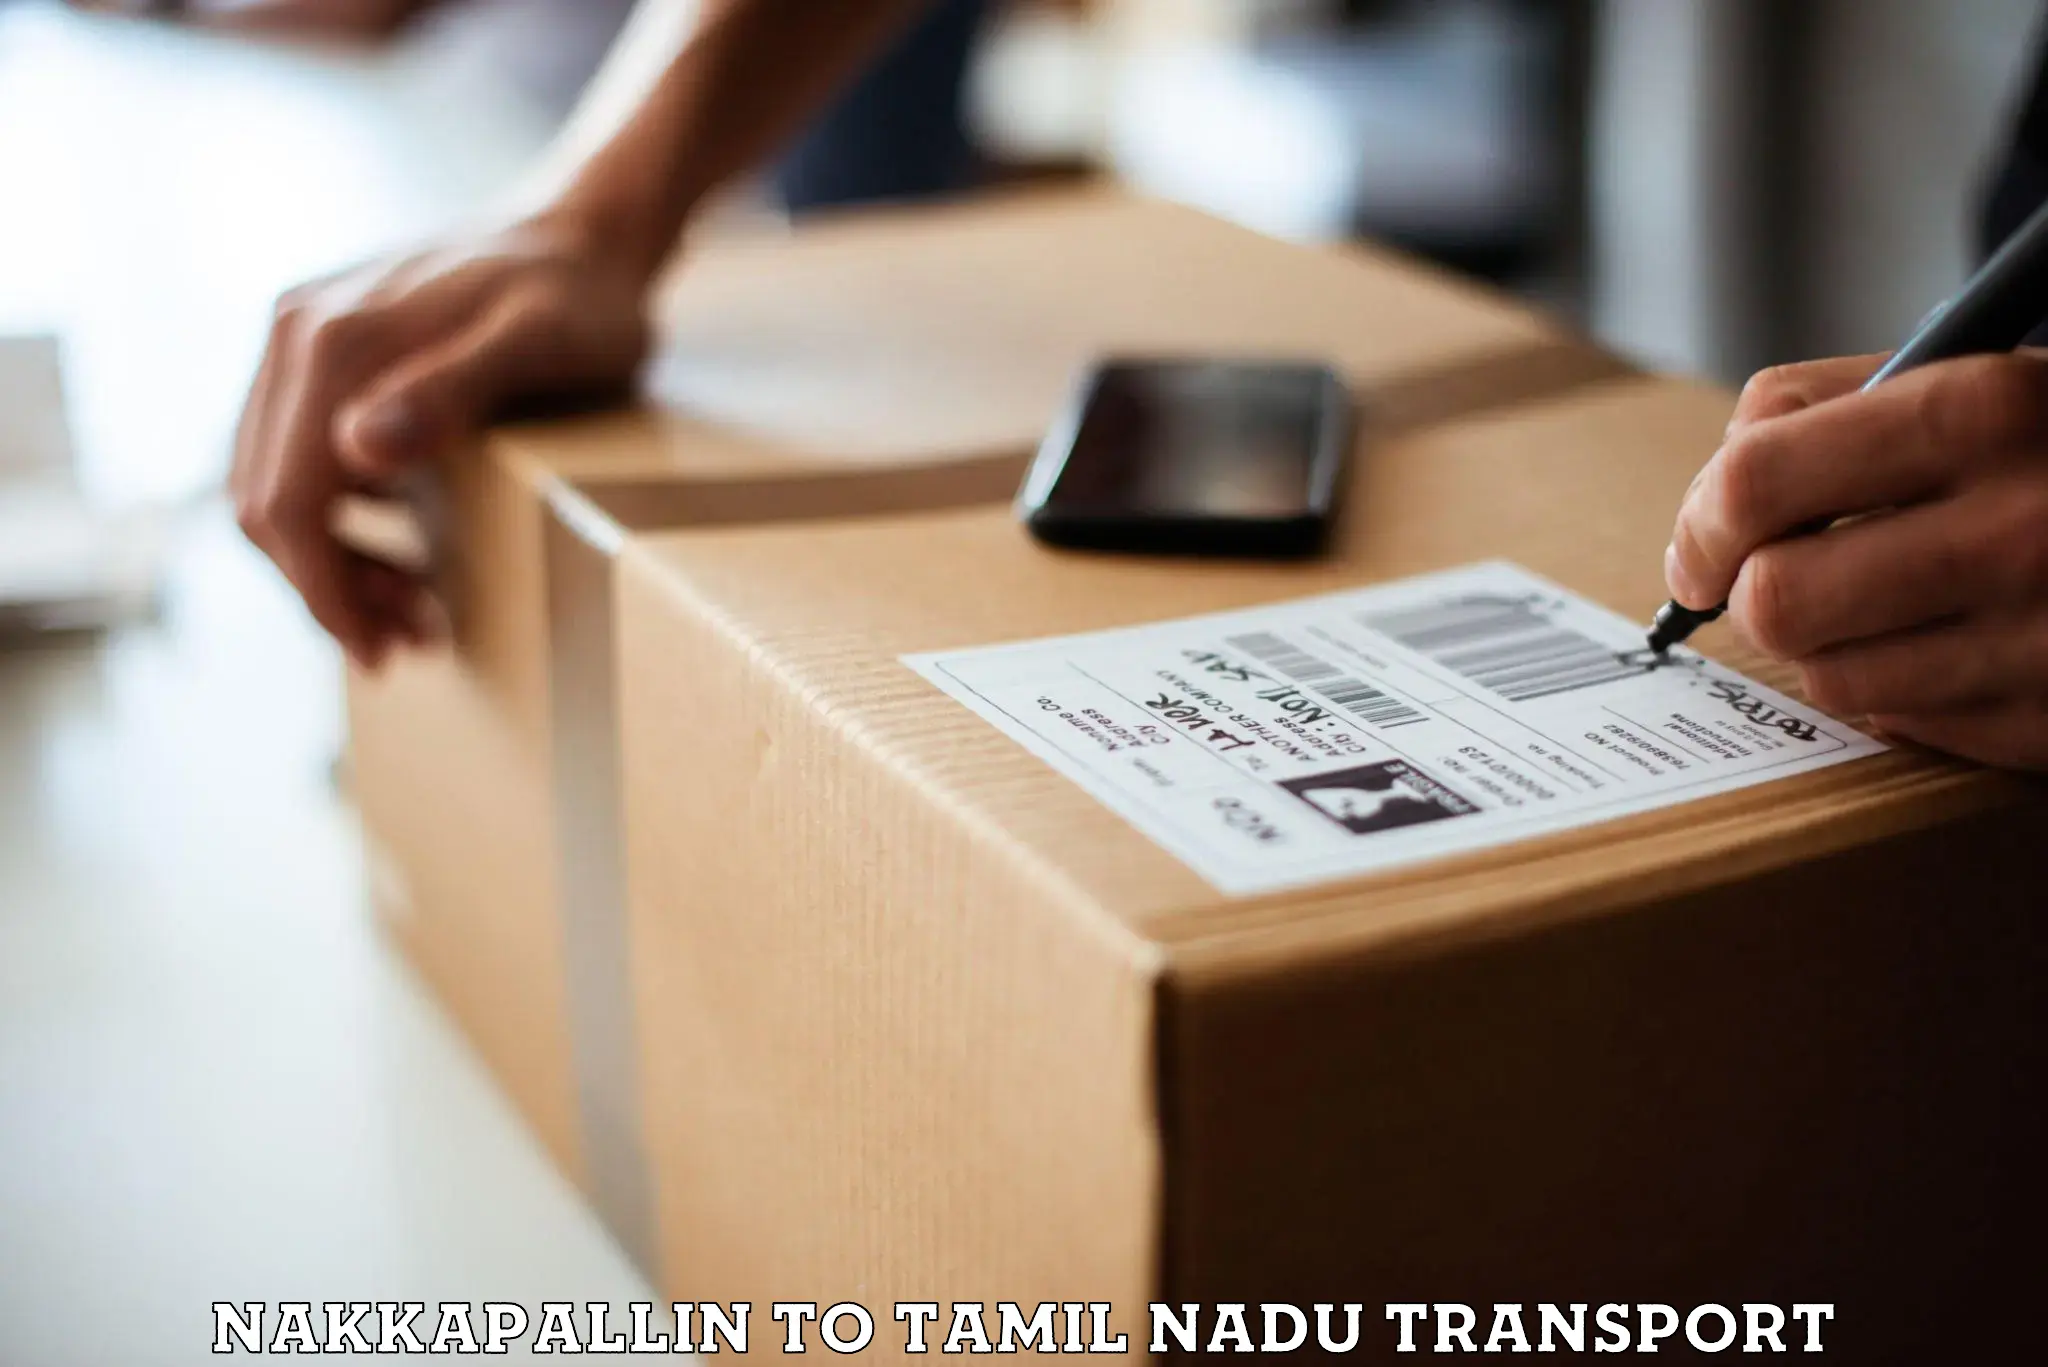 Transport in sharing in Nakkapallin to Ambattur